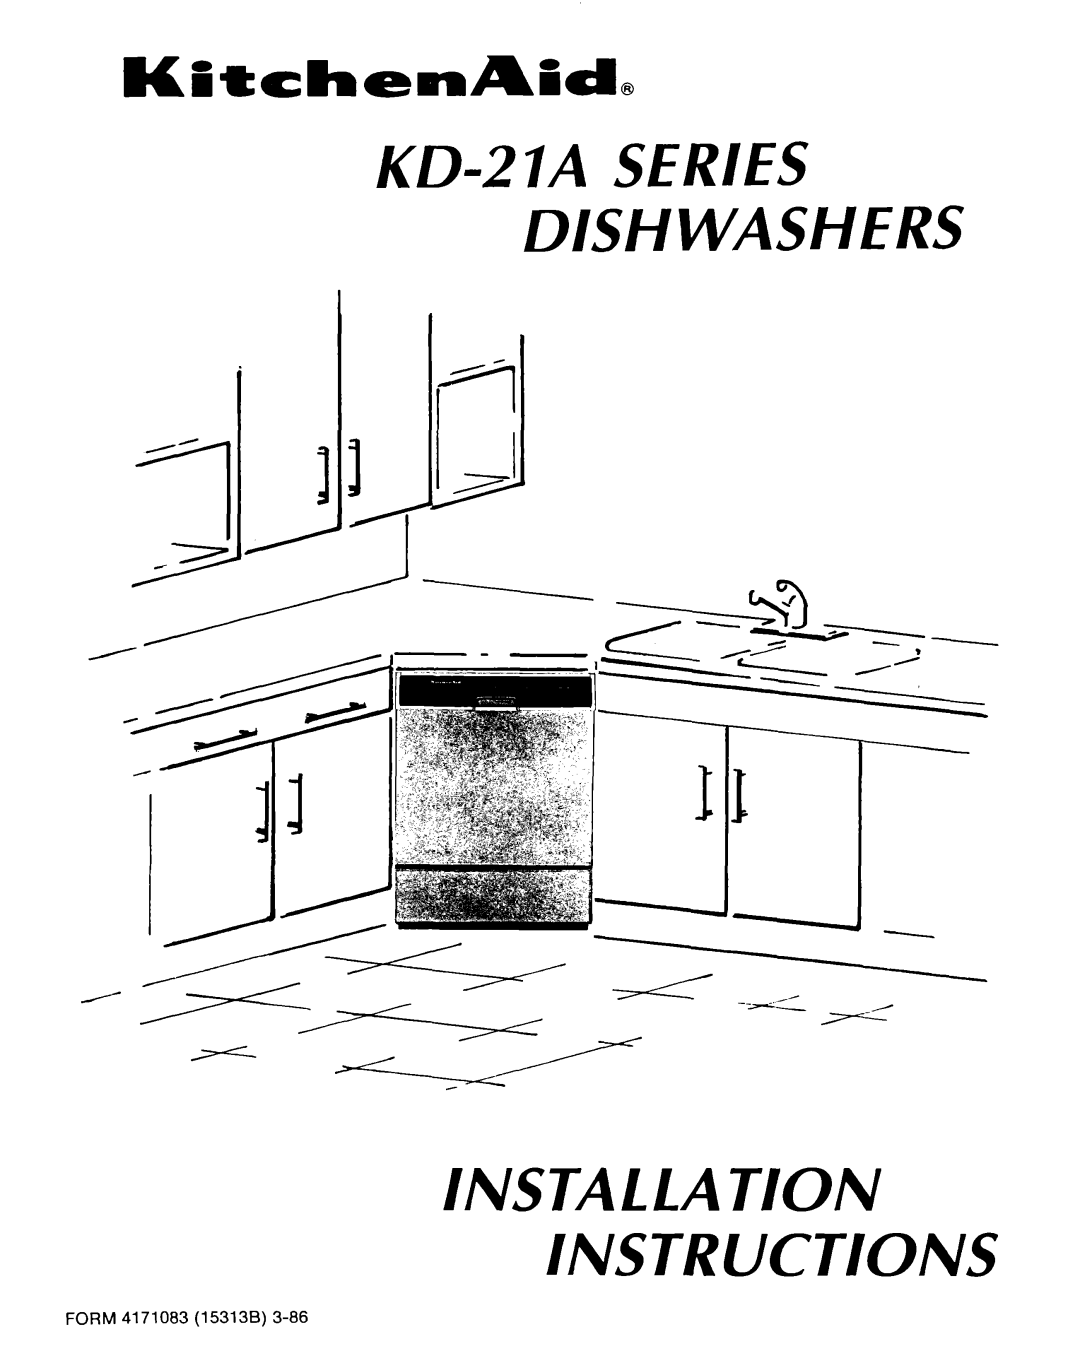 KitchenAid installation instructions KD-27A SERIES DISHWASHERS INSTALLATION INSTRUCTIONS, FORM 4171083 153138 